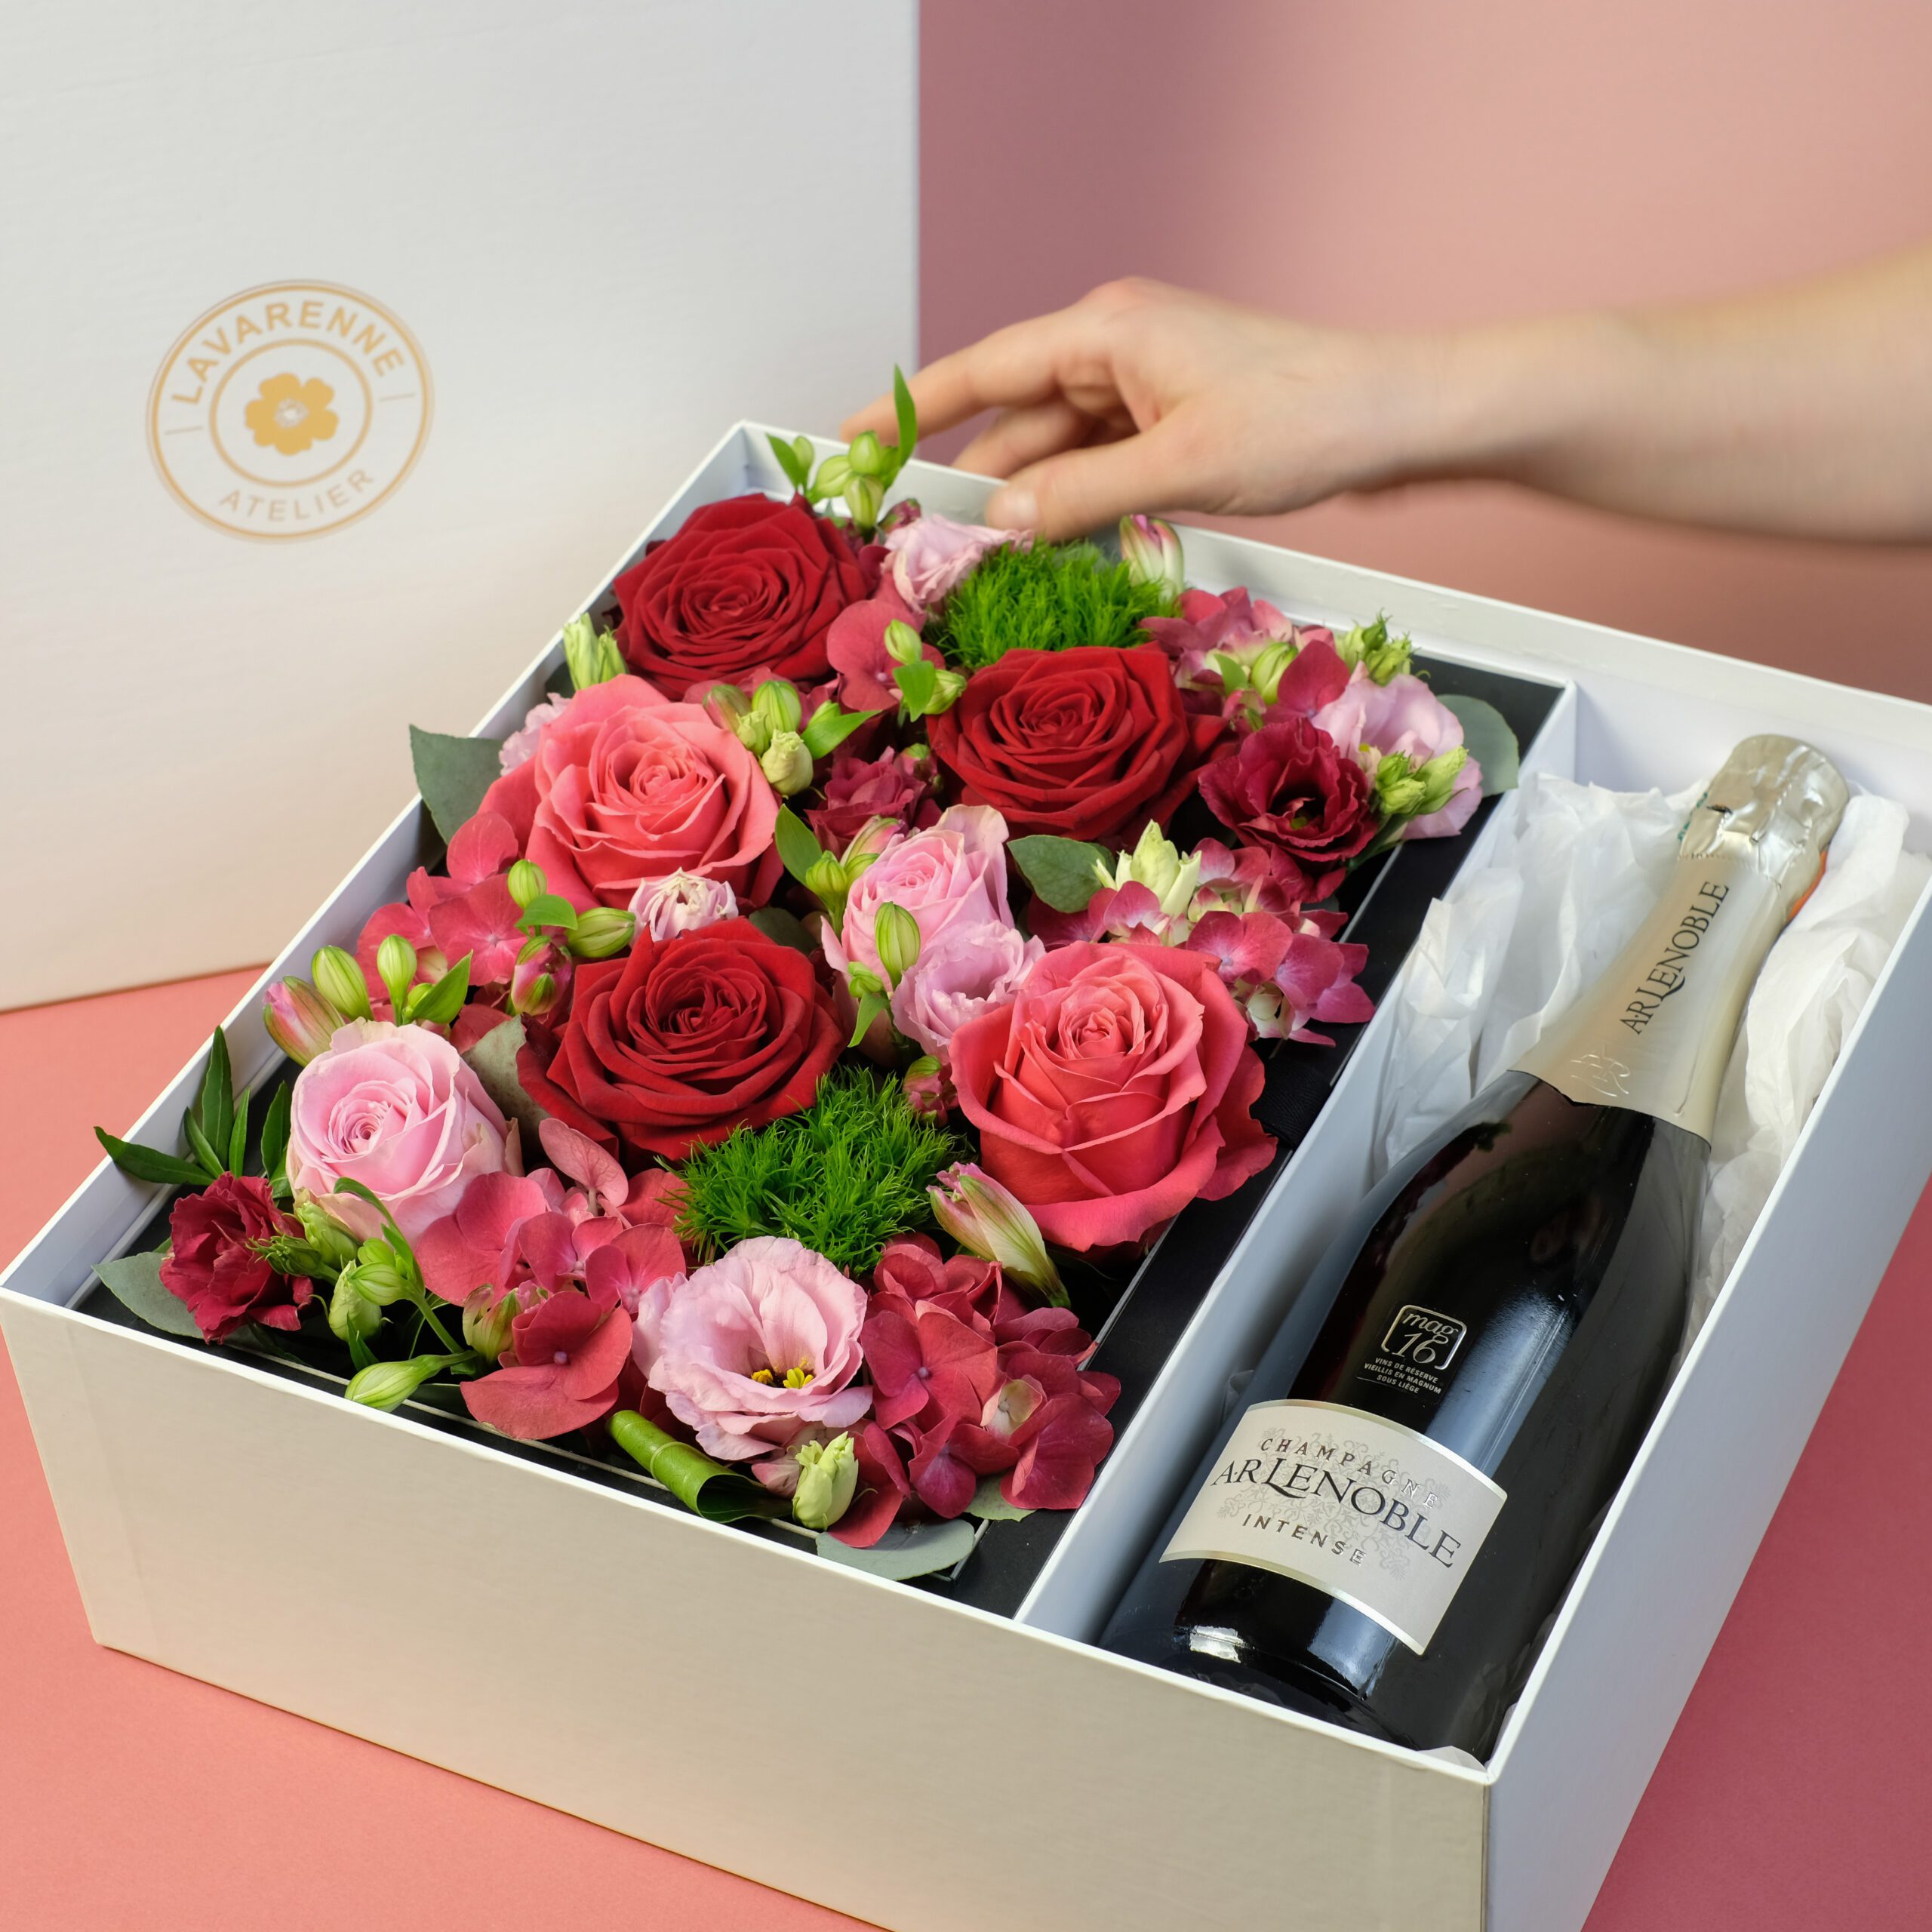 flower box Coffret-champagne-flower-box-atelier-lavarenne-fleuriste-lyon